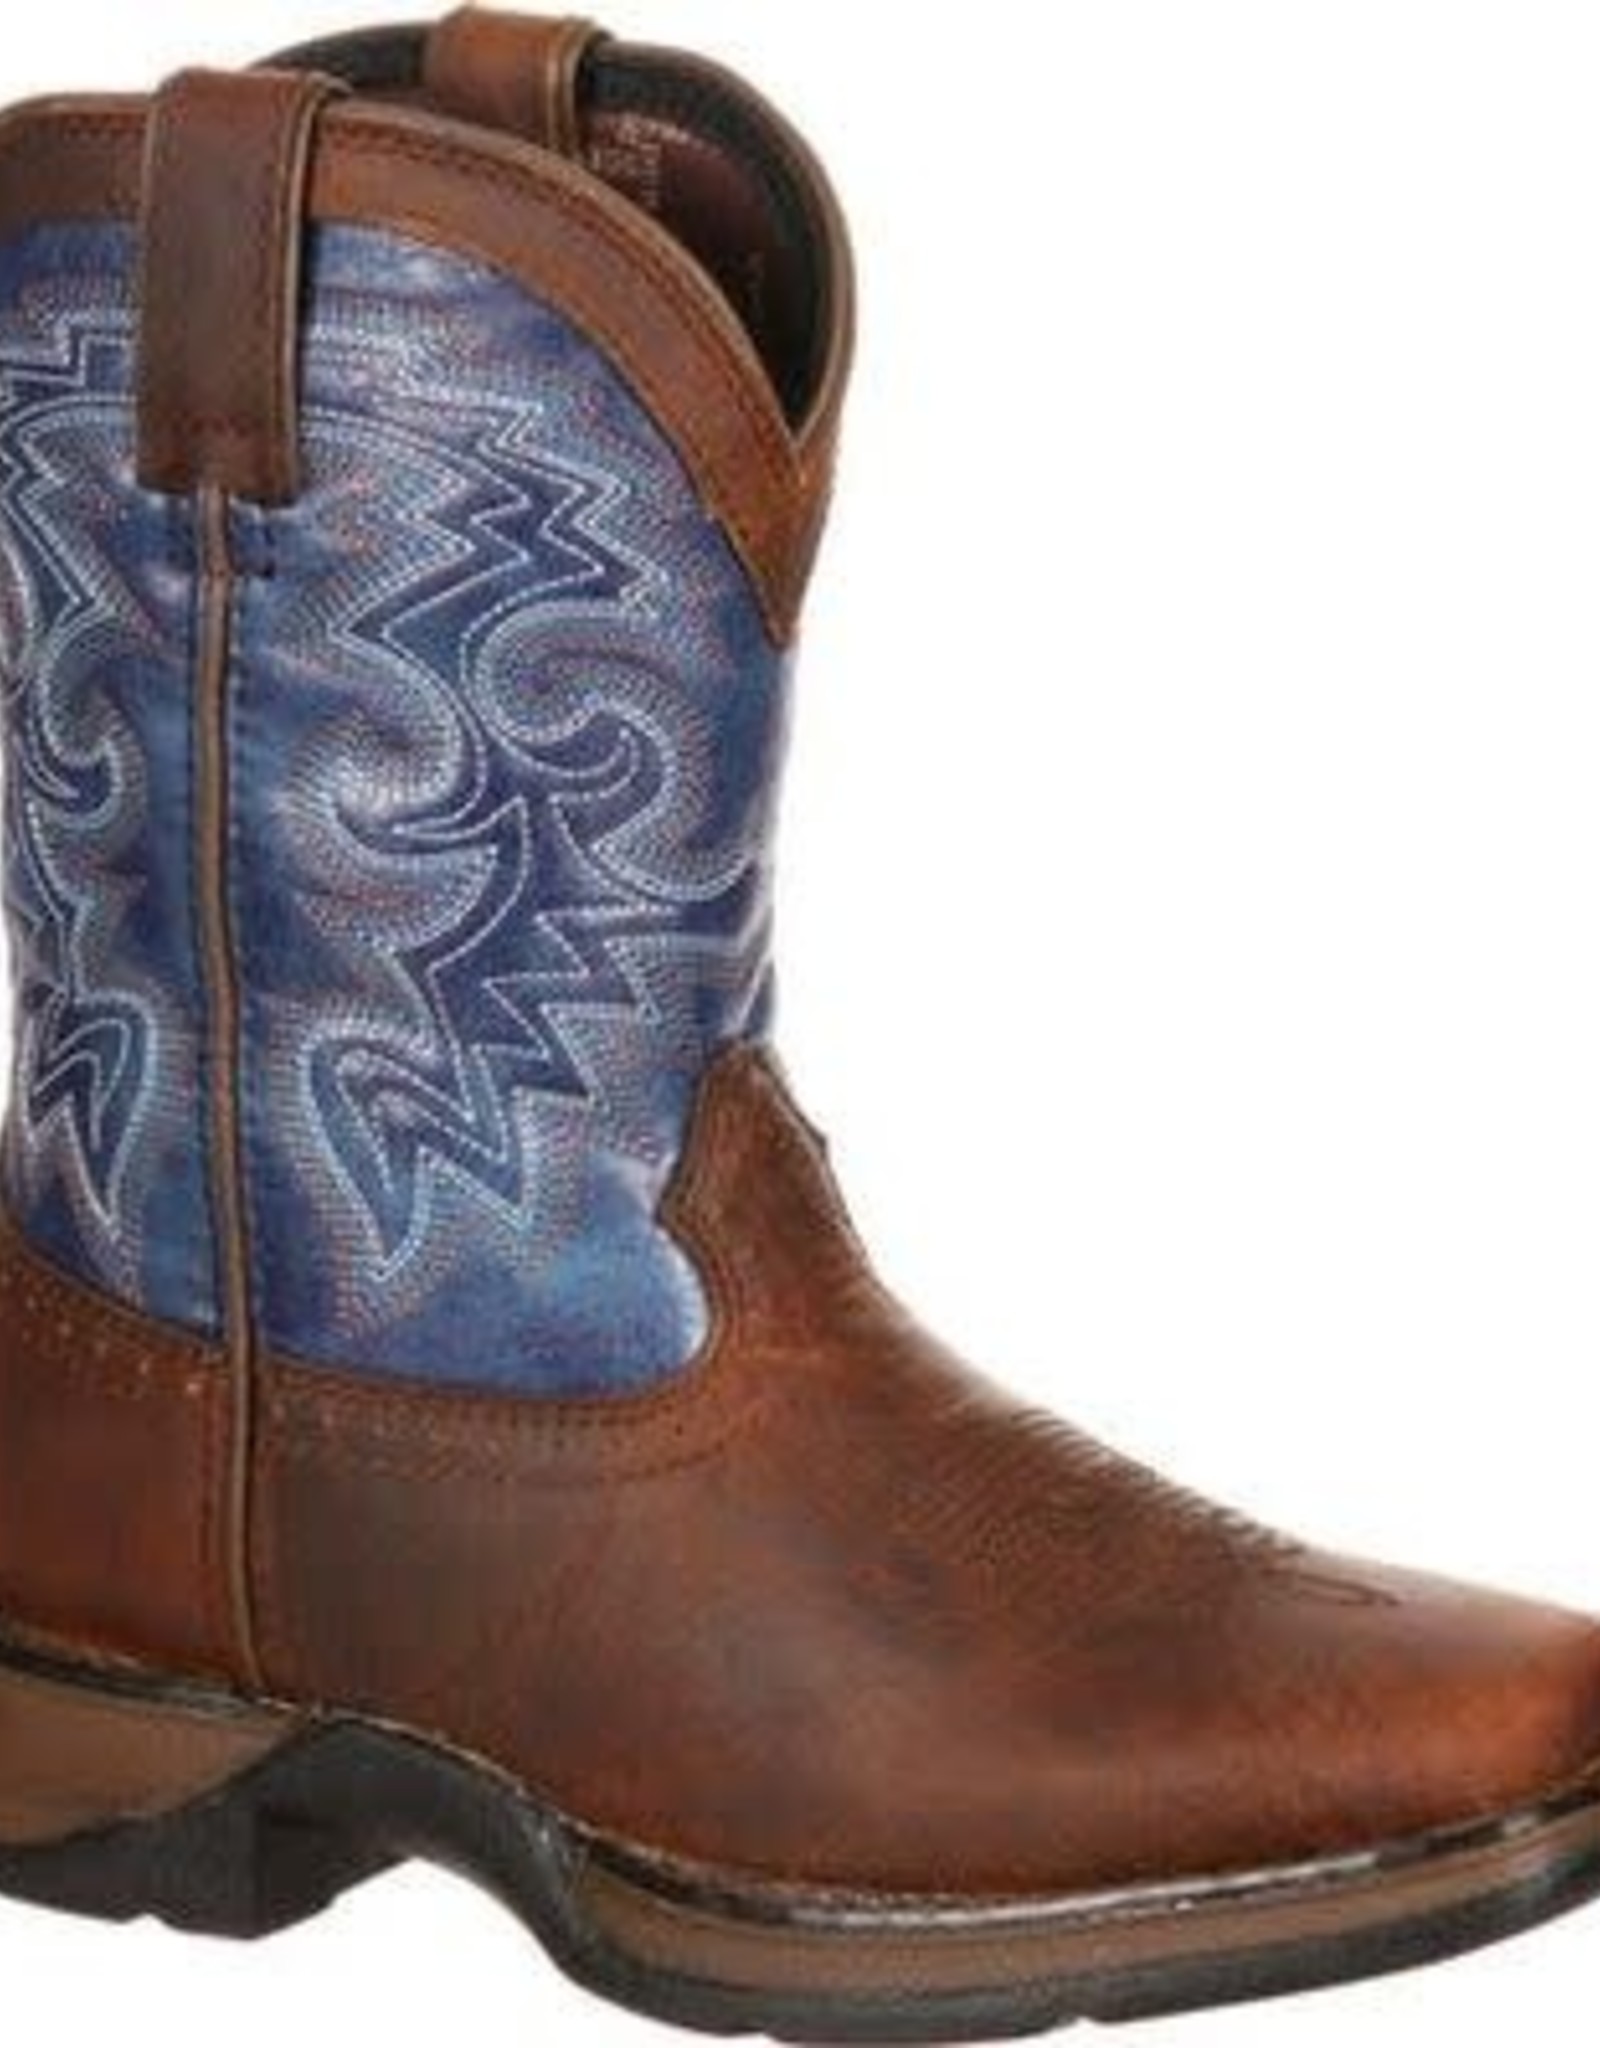 Durango Lil Durango Kids Brown Blue Western Square Toe Cowboy Boots Sz 8.5-3